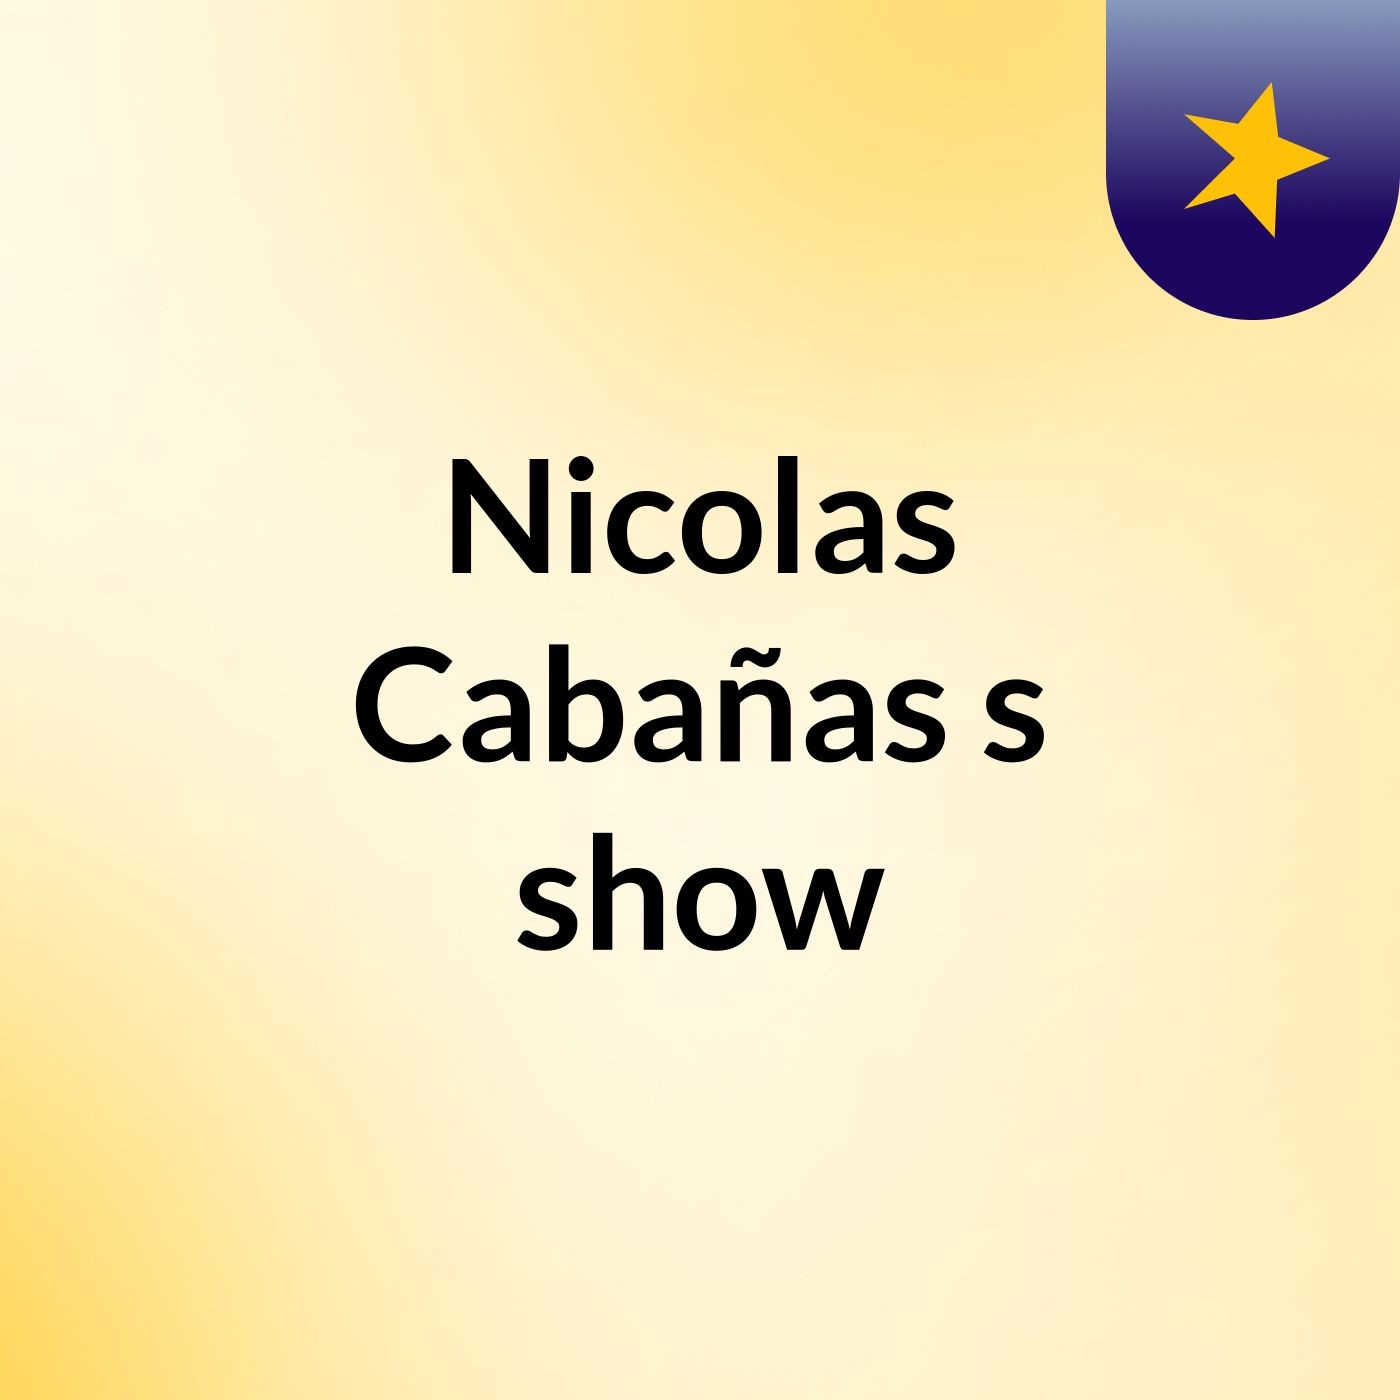 Nicolas Cabañas's show